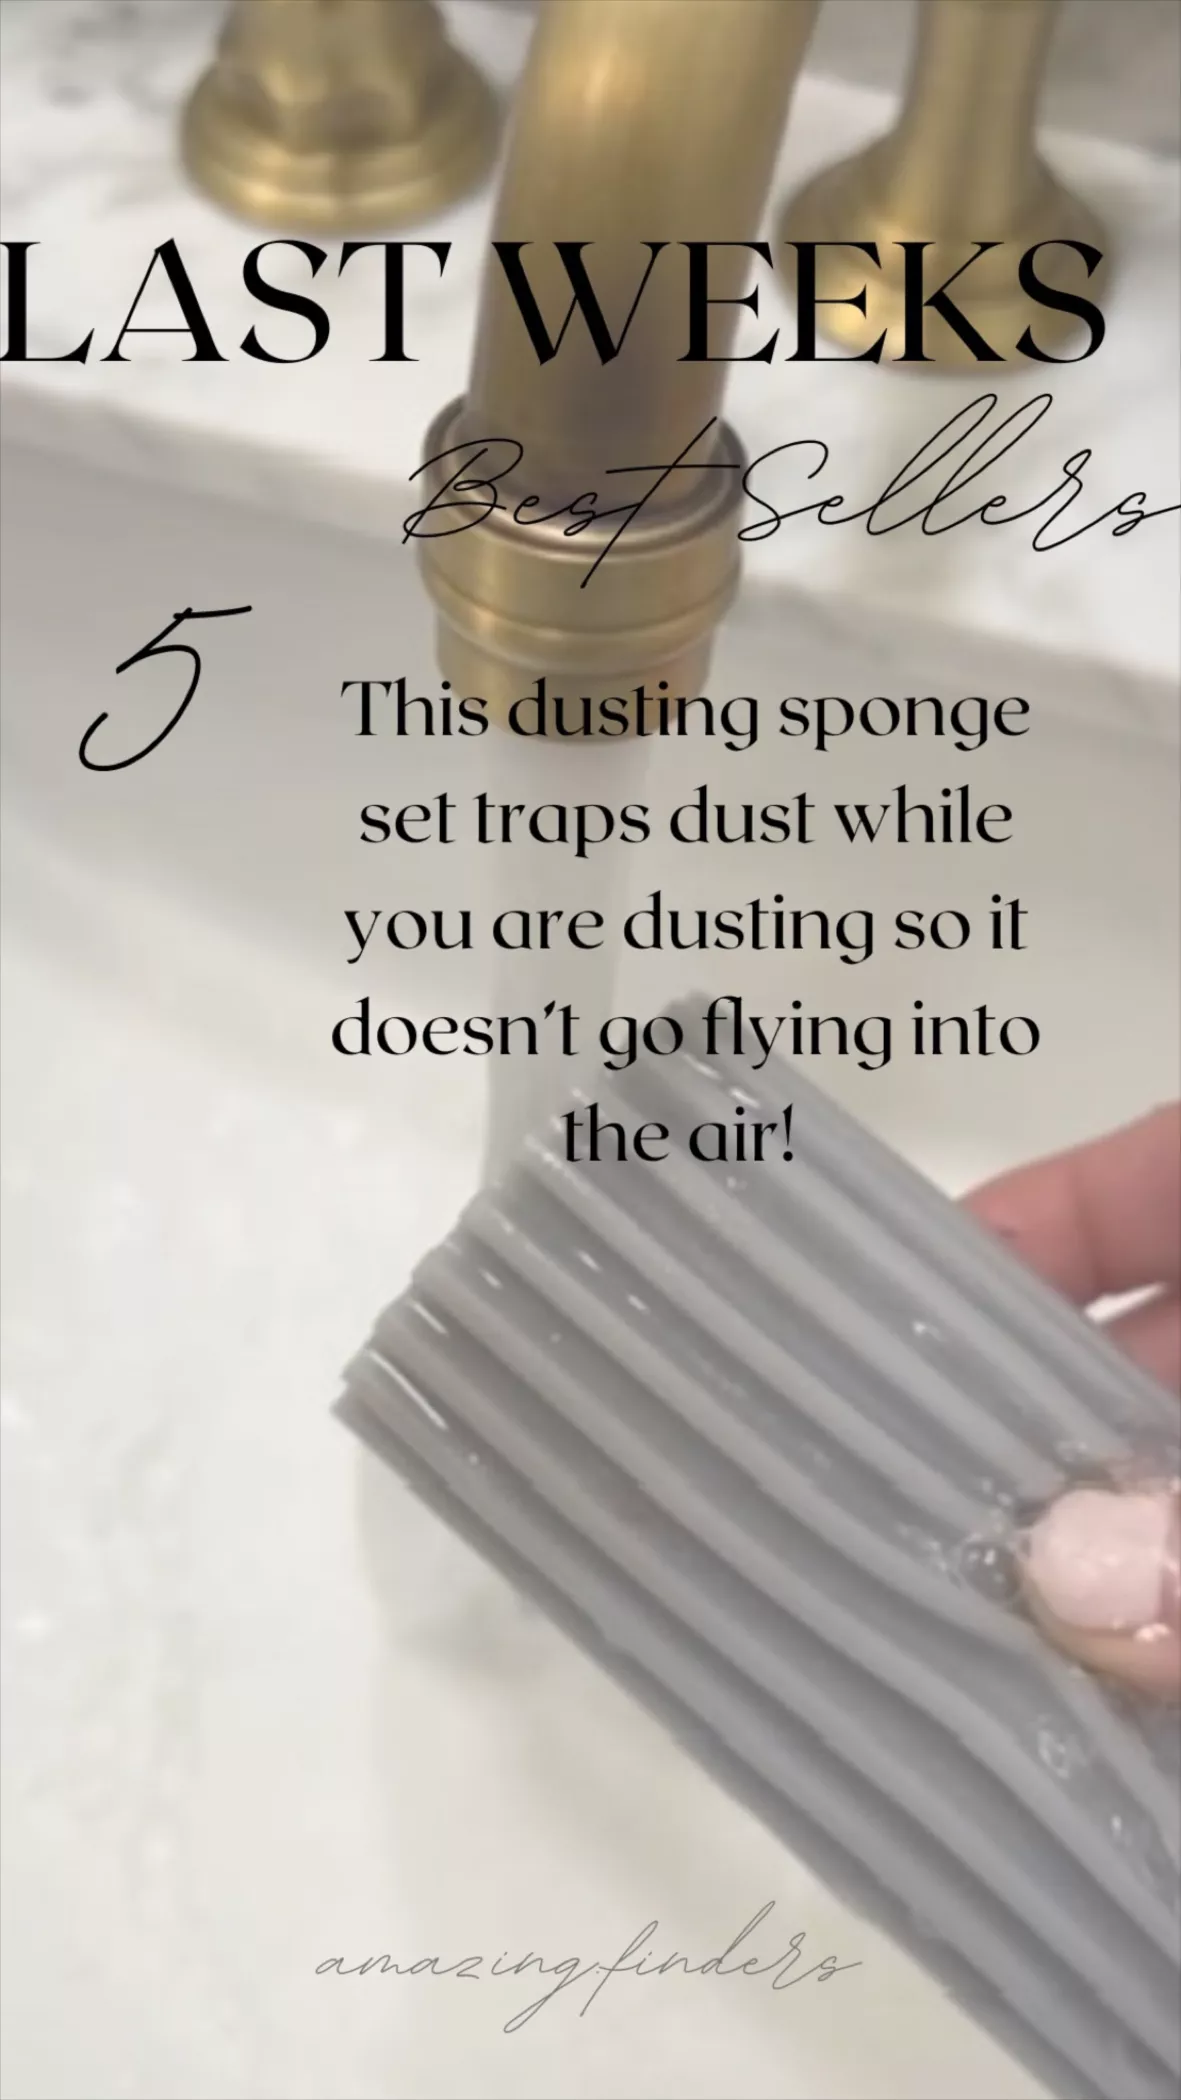 4 Pack Damp Dusting Sponge Duster, Grey Dust Cleaning Sponge